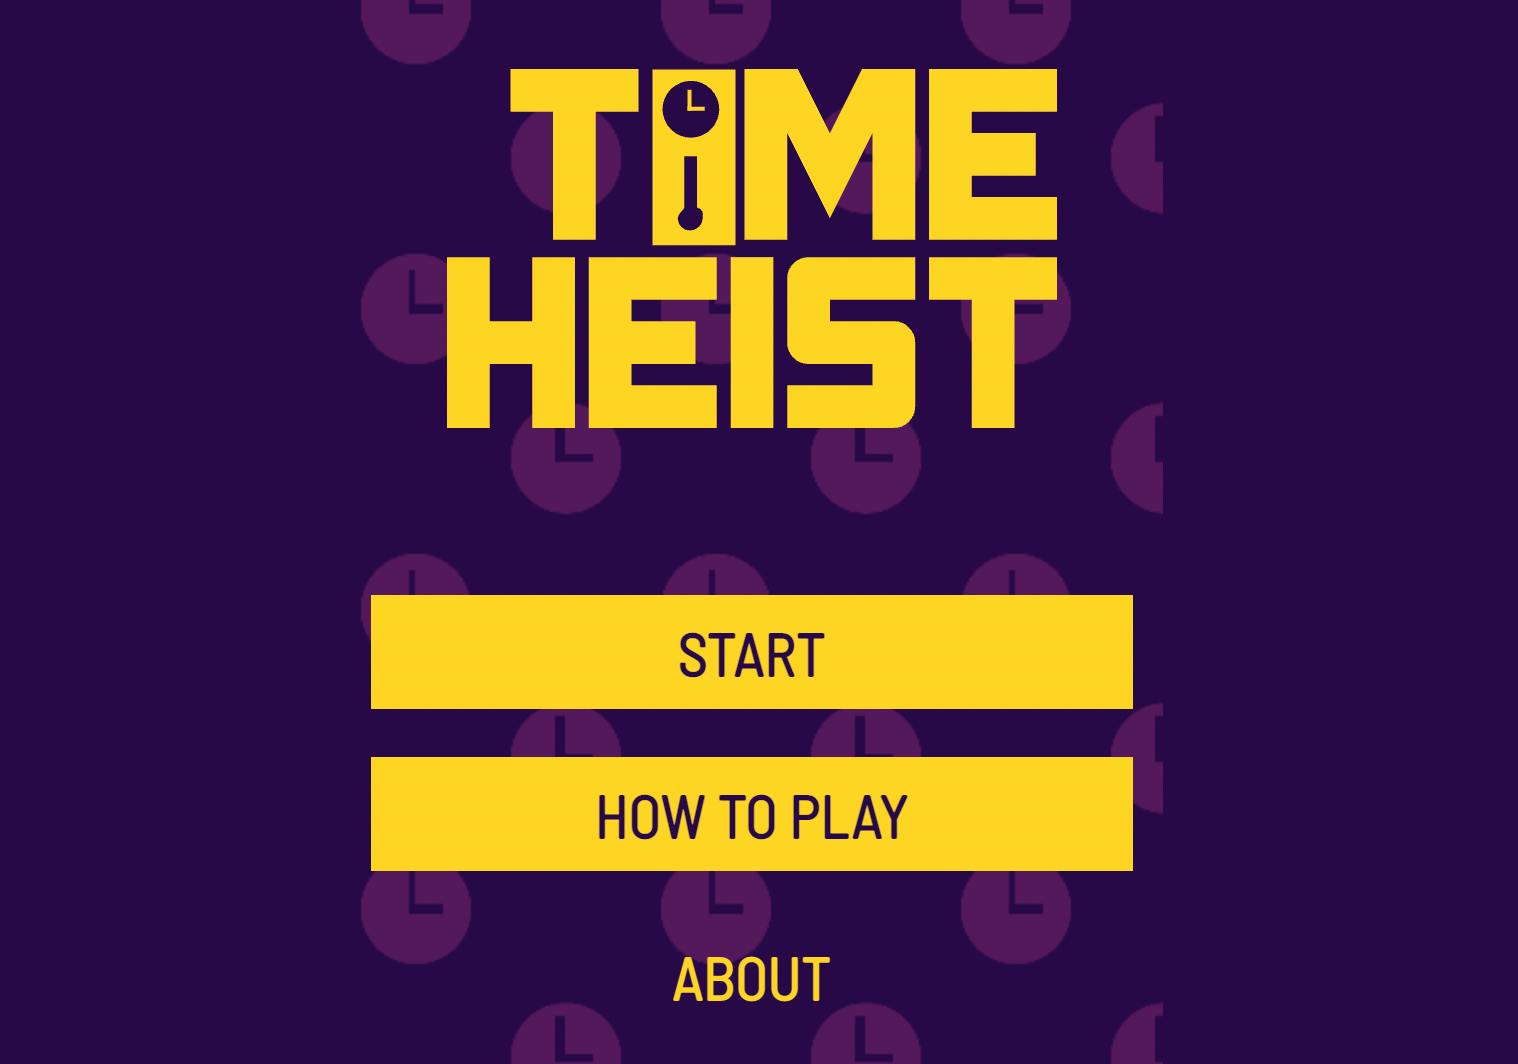 A screenshot from the Time Heist online game start screen.